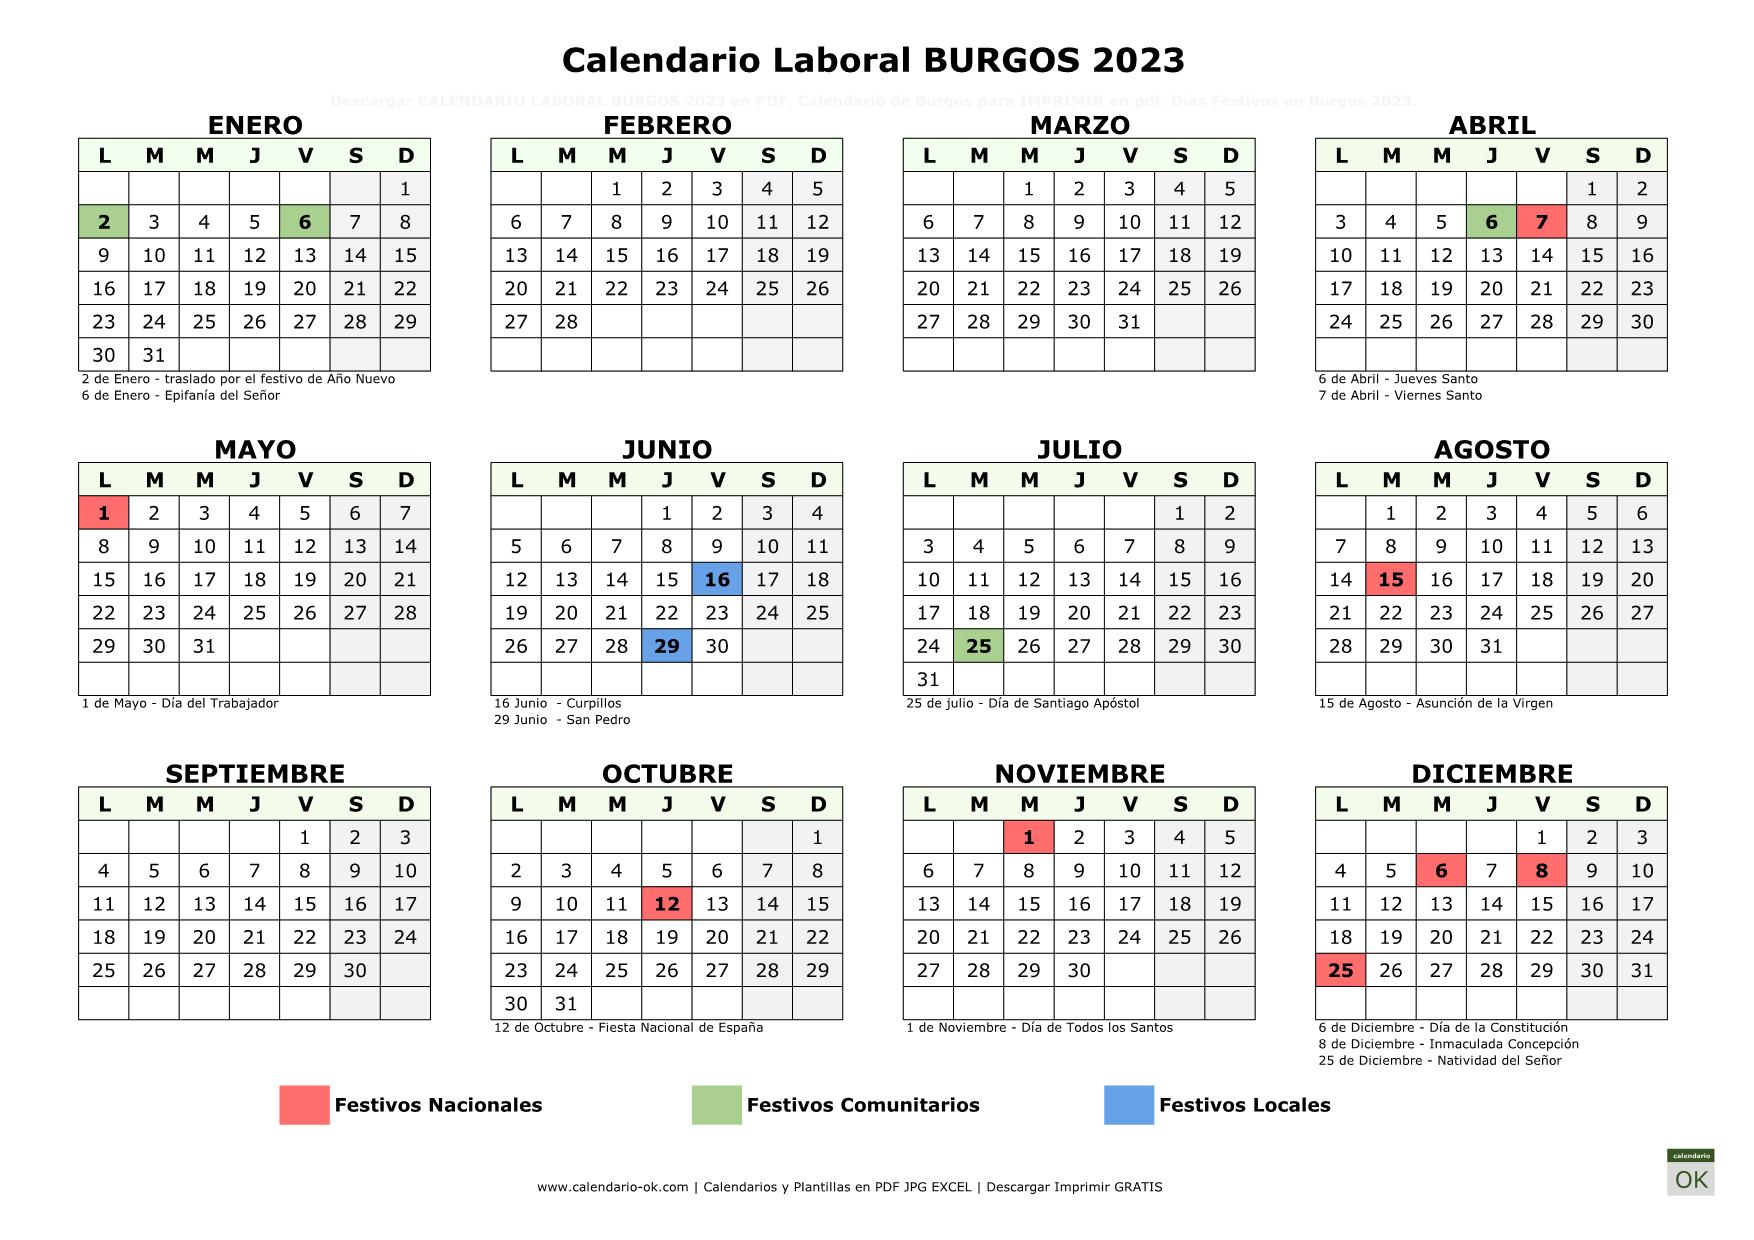 Calendario Laboral Burgos 2023 horizontal